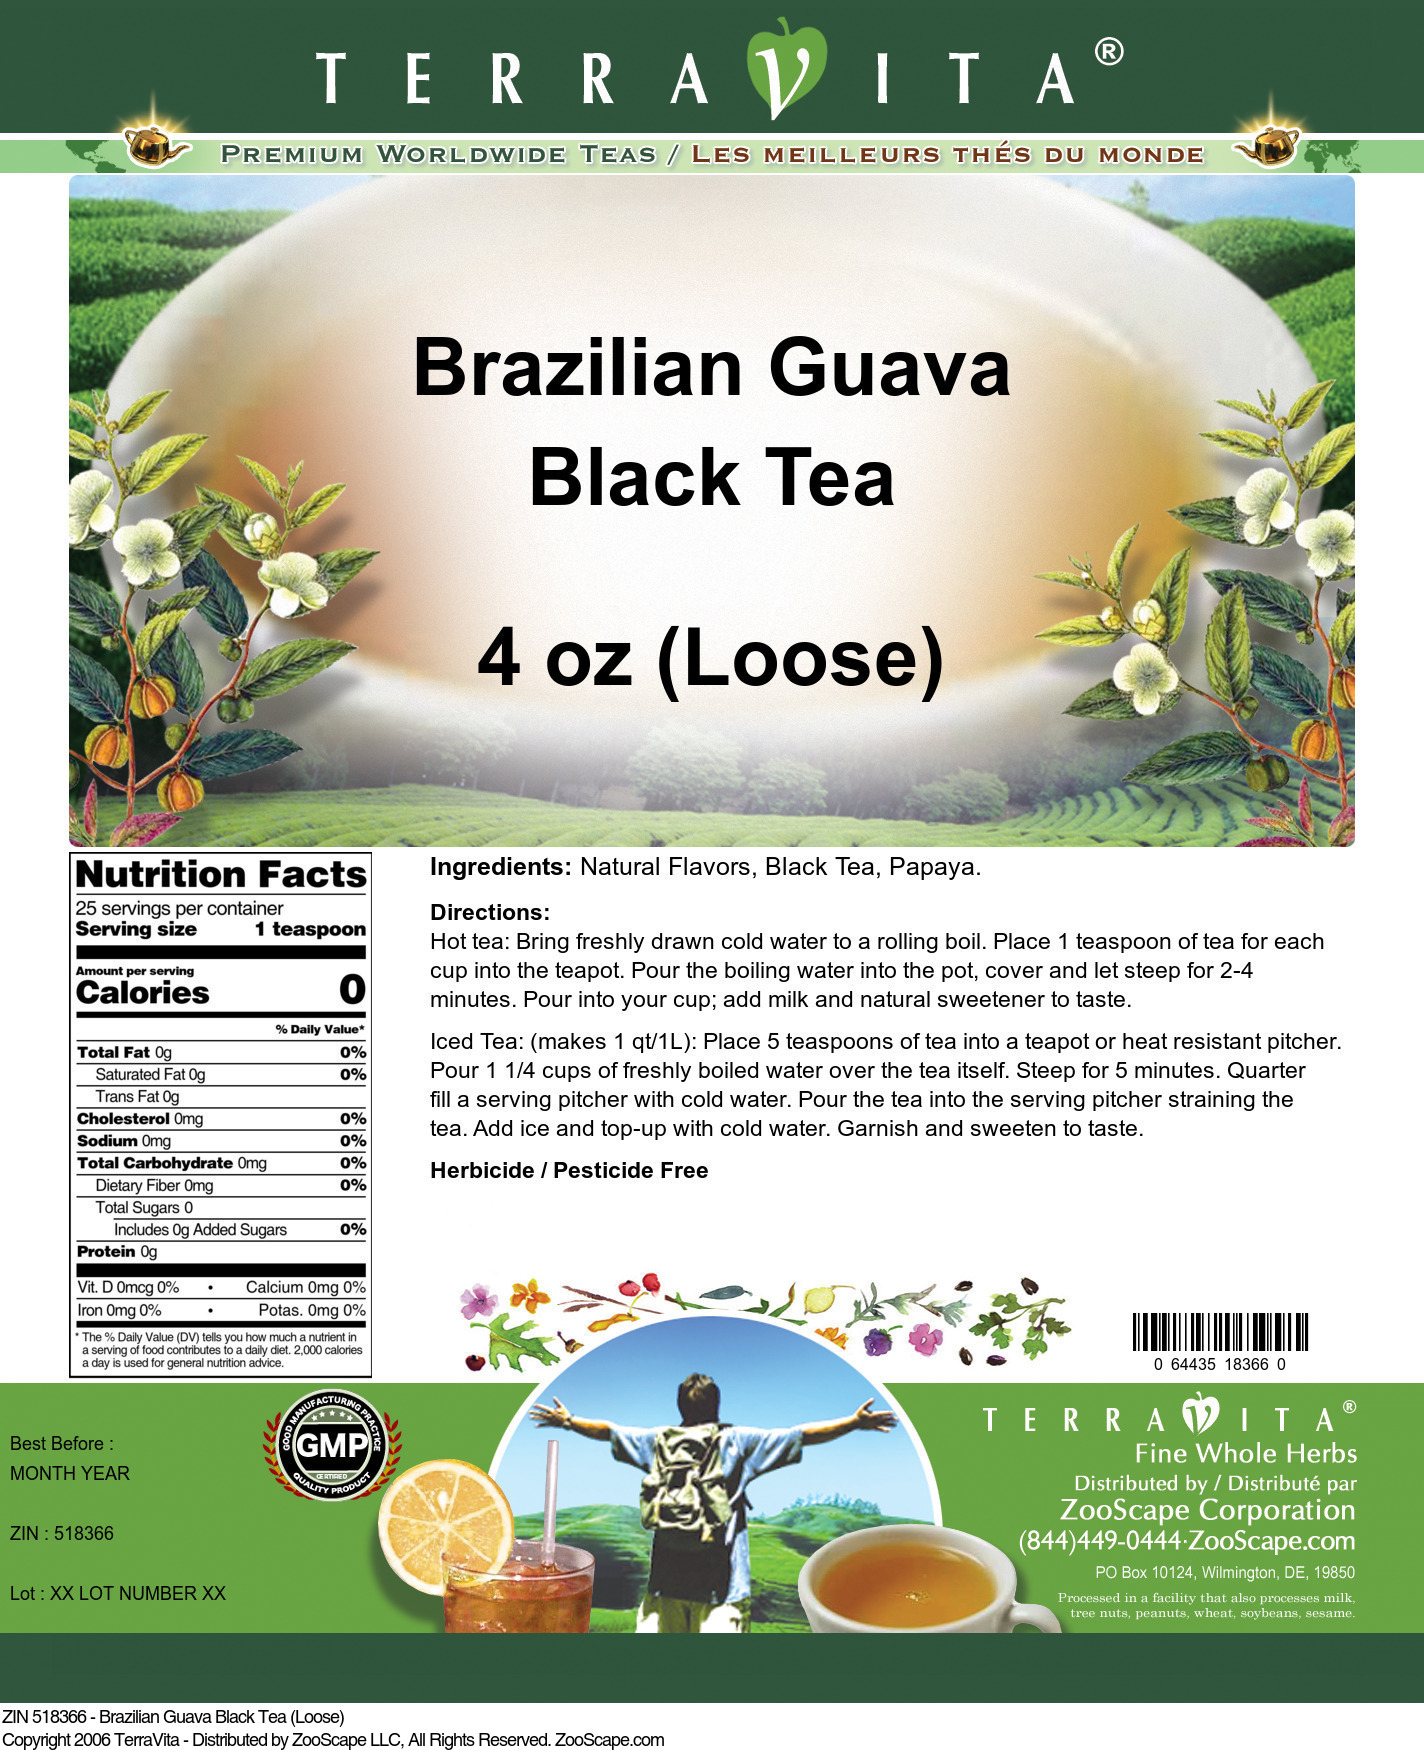 Brazilian Guava Black Tea (Loose) - Label